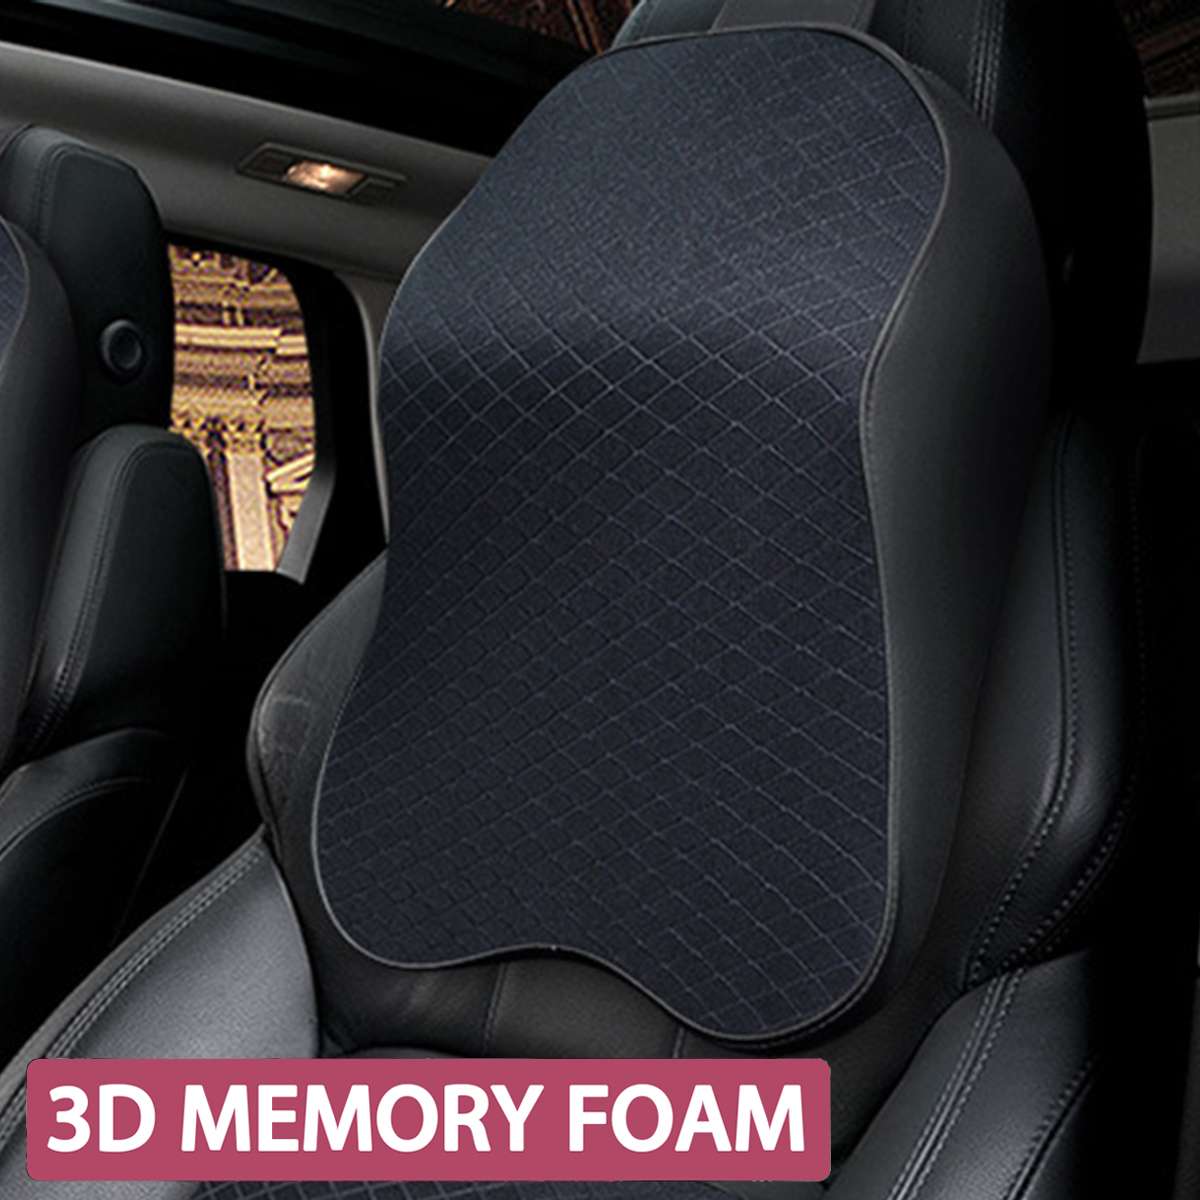 Car Neck Pillow 3D Memory Foam Auto Headrest Travel Pillow Lumbar Neck Support Holder PU Leather Car Neck Cushion for Driving